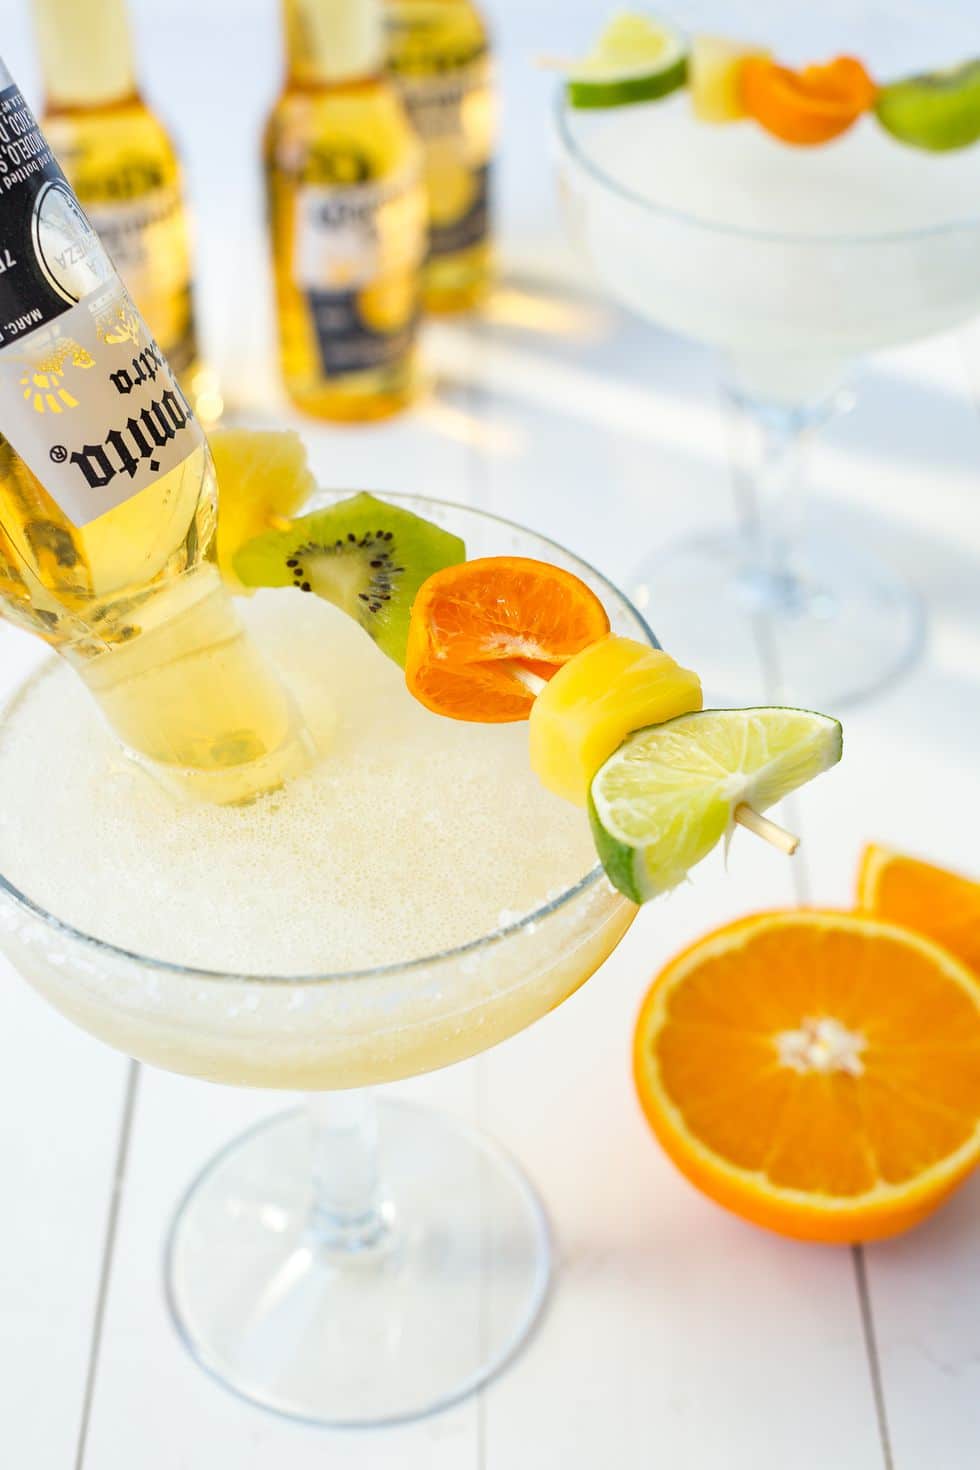 Celebrate Cinco de Mayo With Four Festive Tequila Cocktails